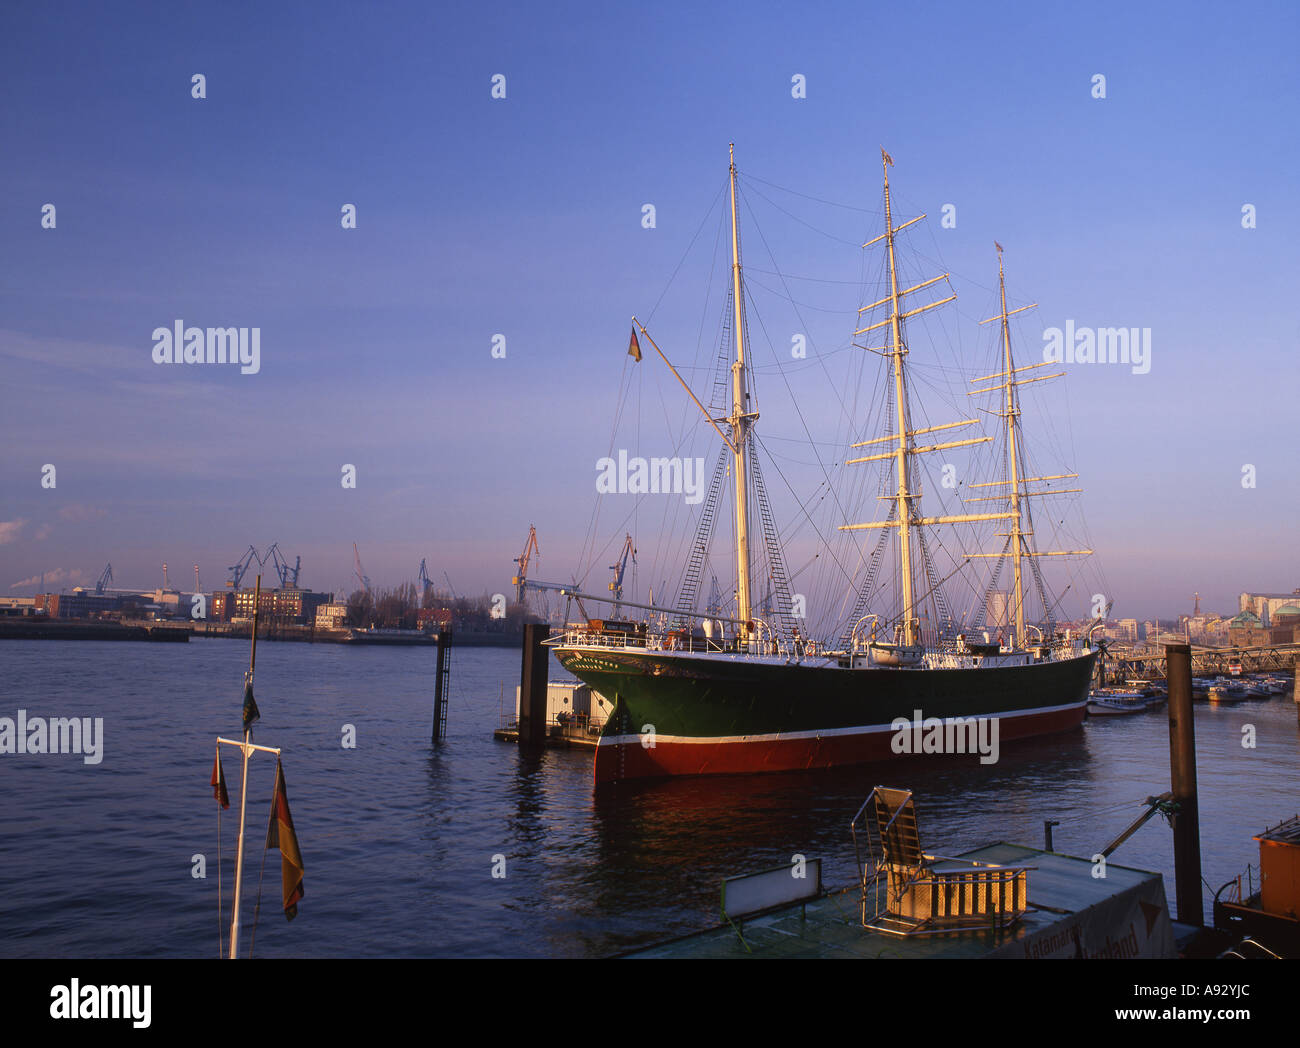 Rickmer Rickmers nave museo porto porto sul fiume Elba la mattina presto vista St Pauli Amburgo Germania Foto Stock